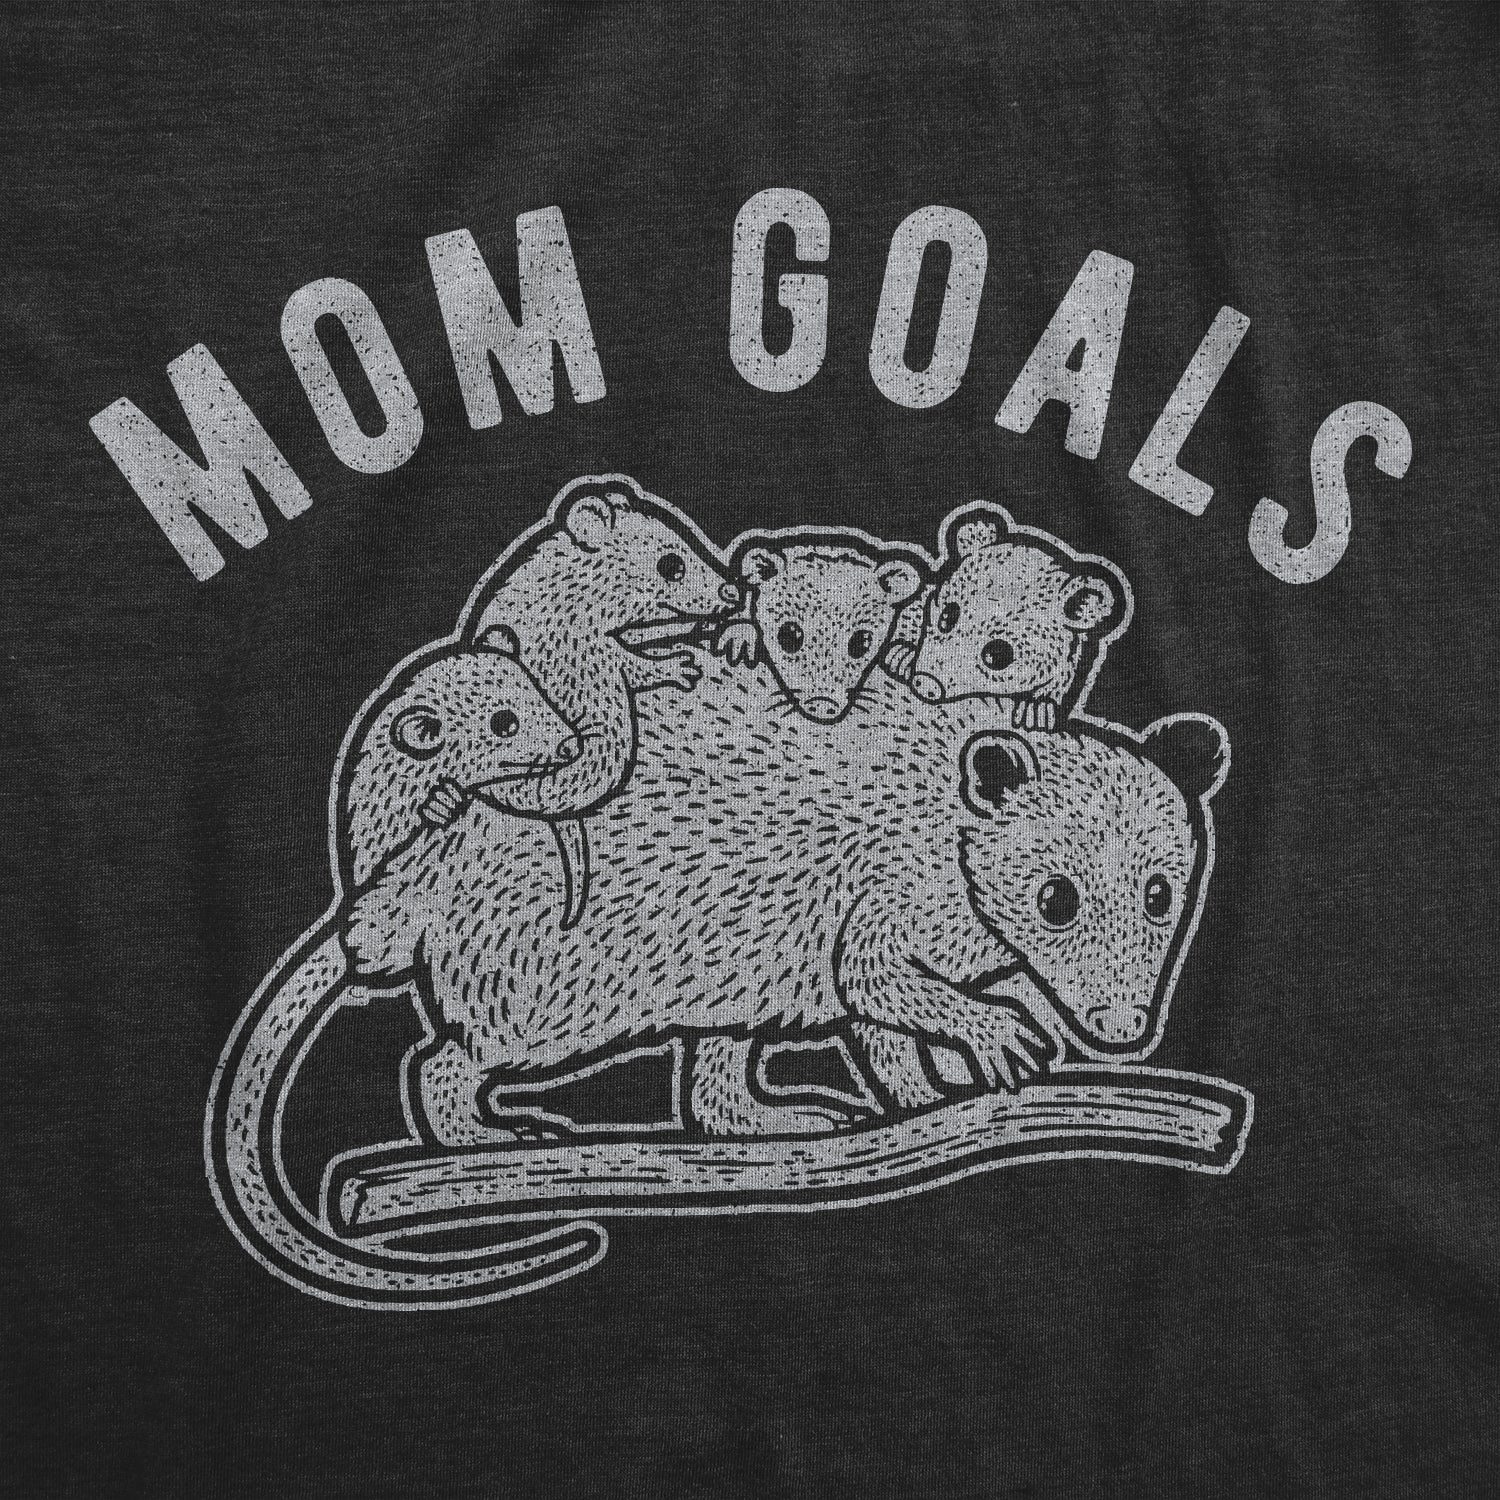 Funny Heather Black - Mom Goals Opossum Mom Goals Womens T Shirt Nerdy Mother's Day Animal Tee